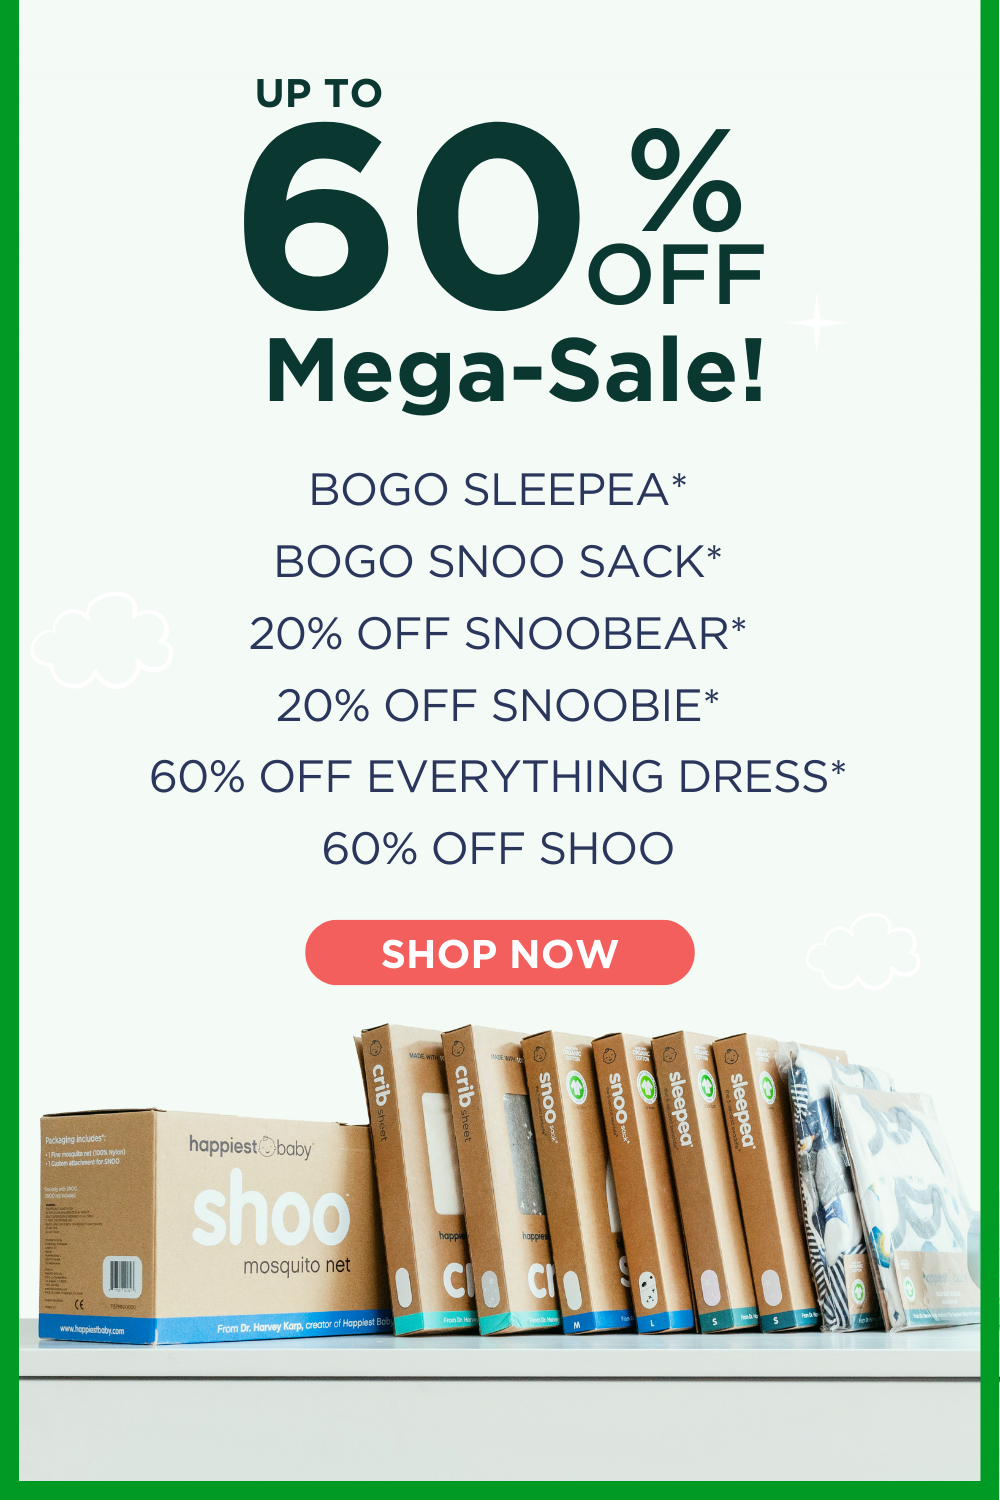 Up to 60% Off Mega-Sale! BOGO SLEEPEA*, BOGO SNOO SACK*, 20% OFF SNOOBEAR*, 20% OFF SNOOBIE*, 60% OFF EVERYTHING DRESS*. 60% OFF SHOO. SHOP NOW